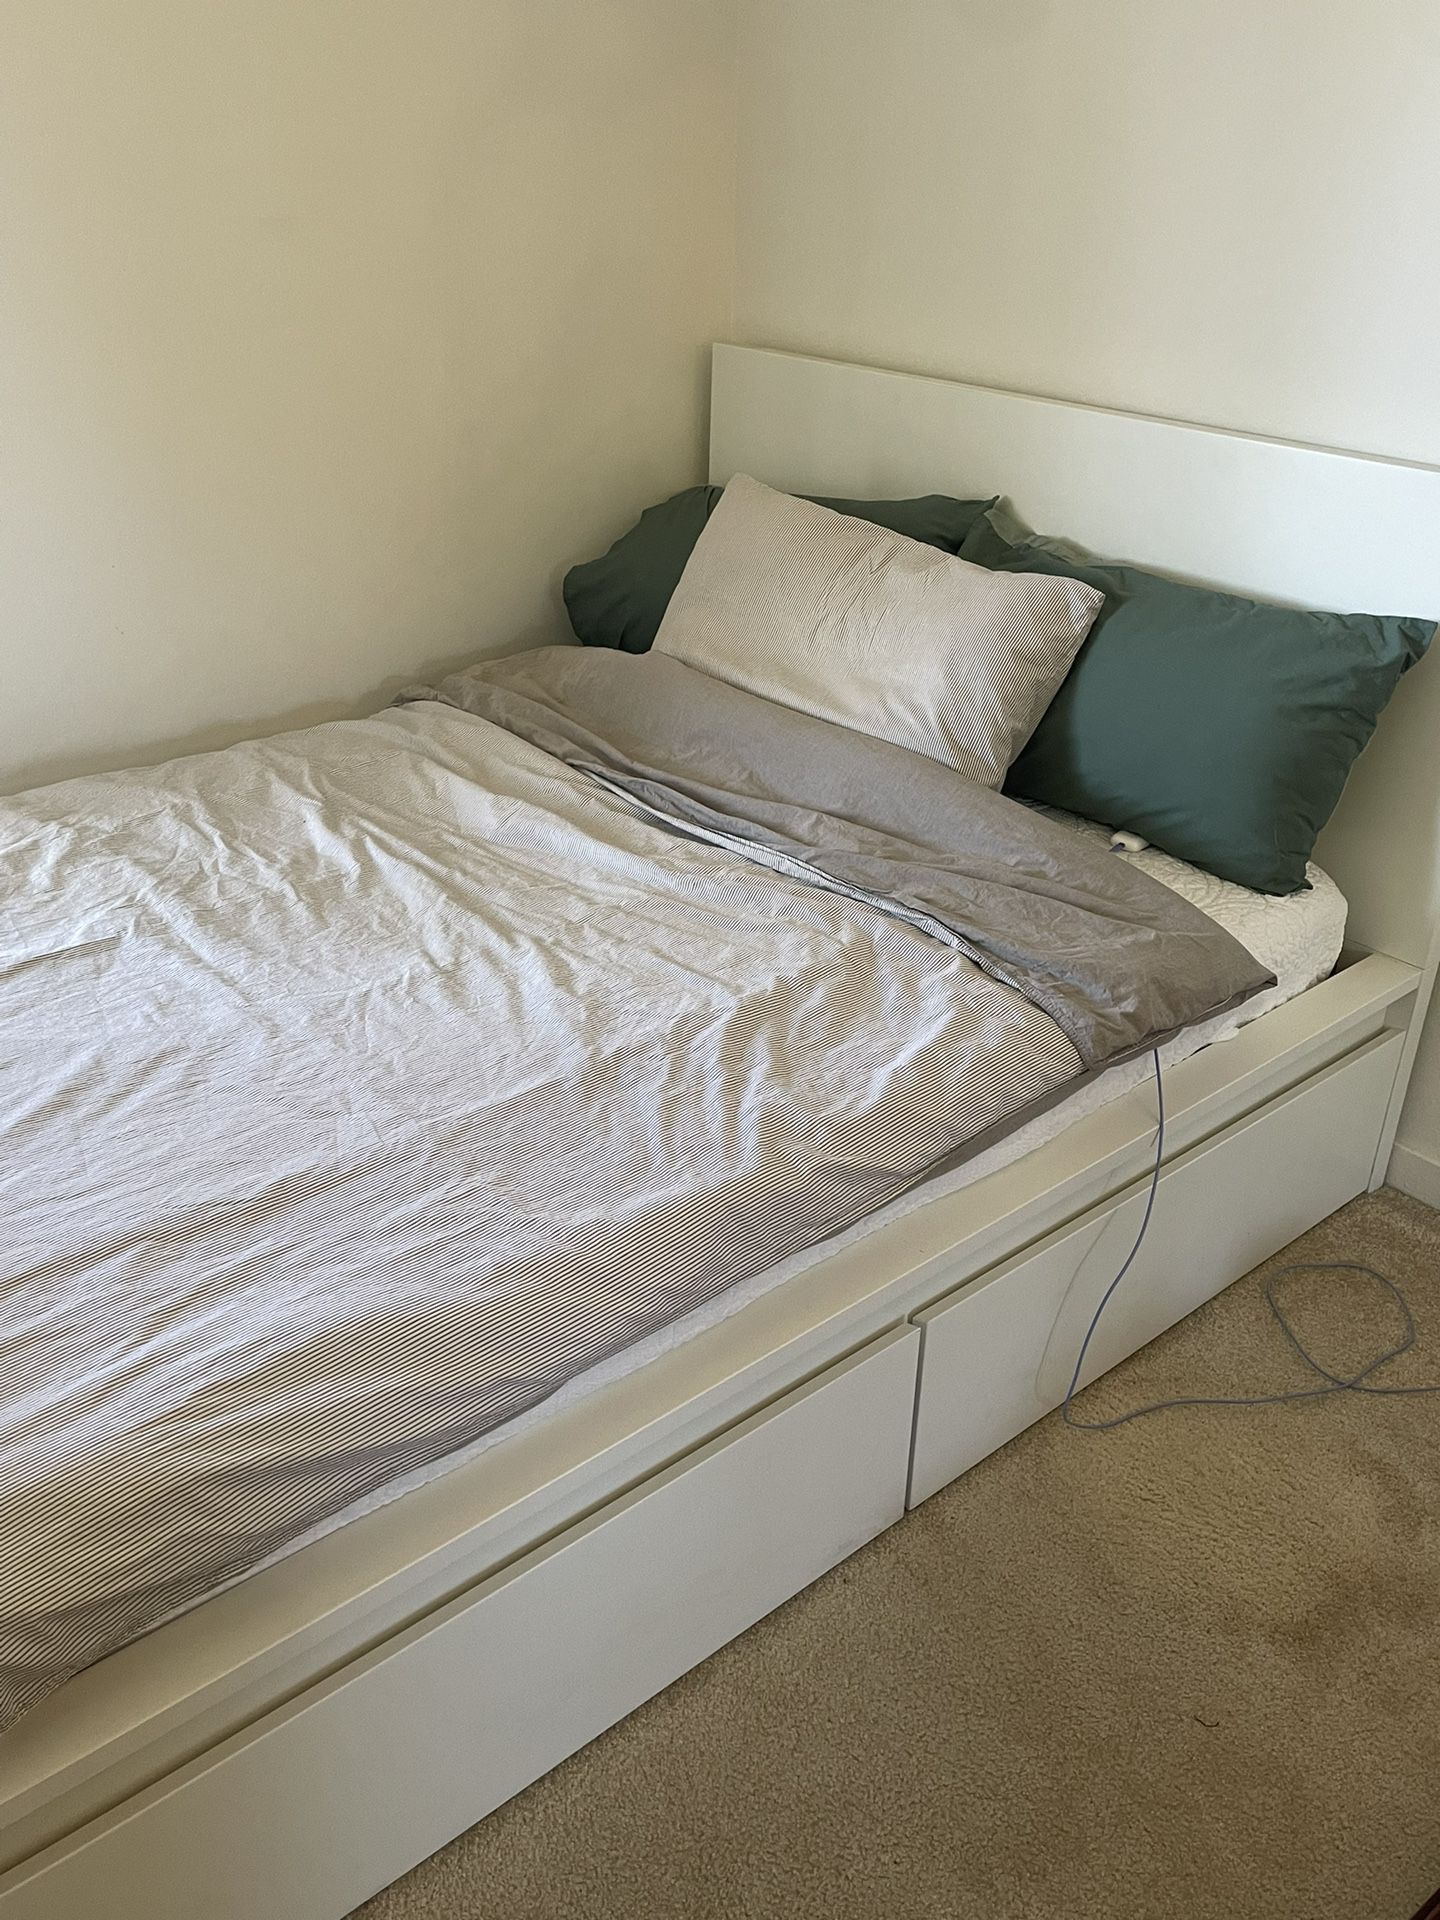 full size bed frame + mattress